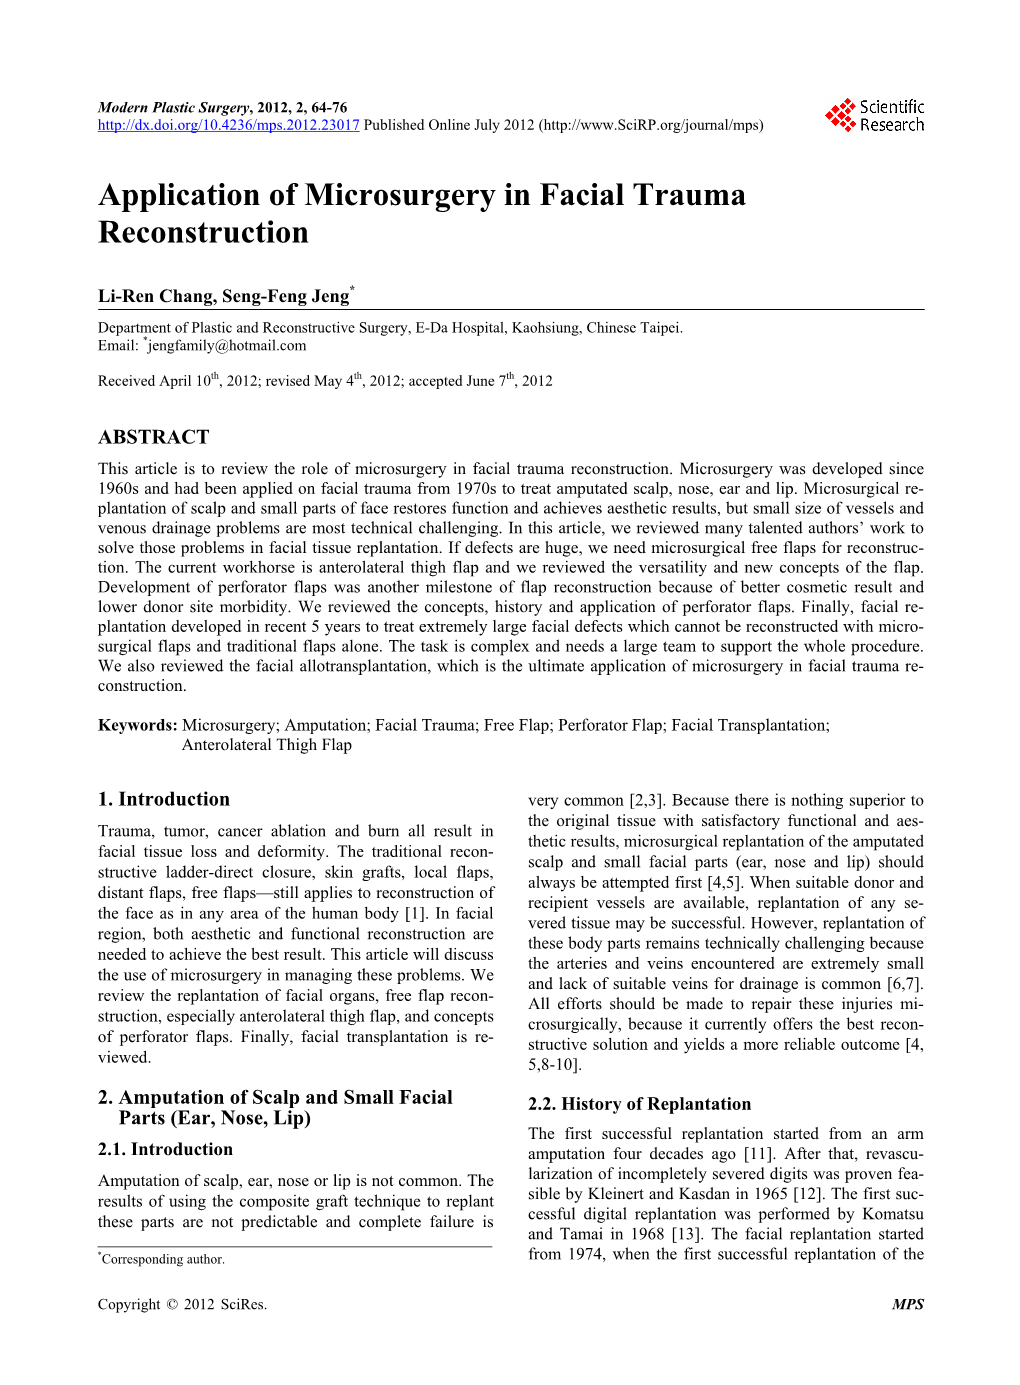 Application of Microsurgery in Facial Trauma Reconstruction